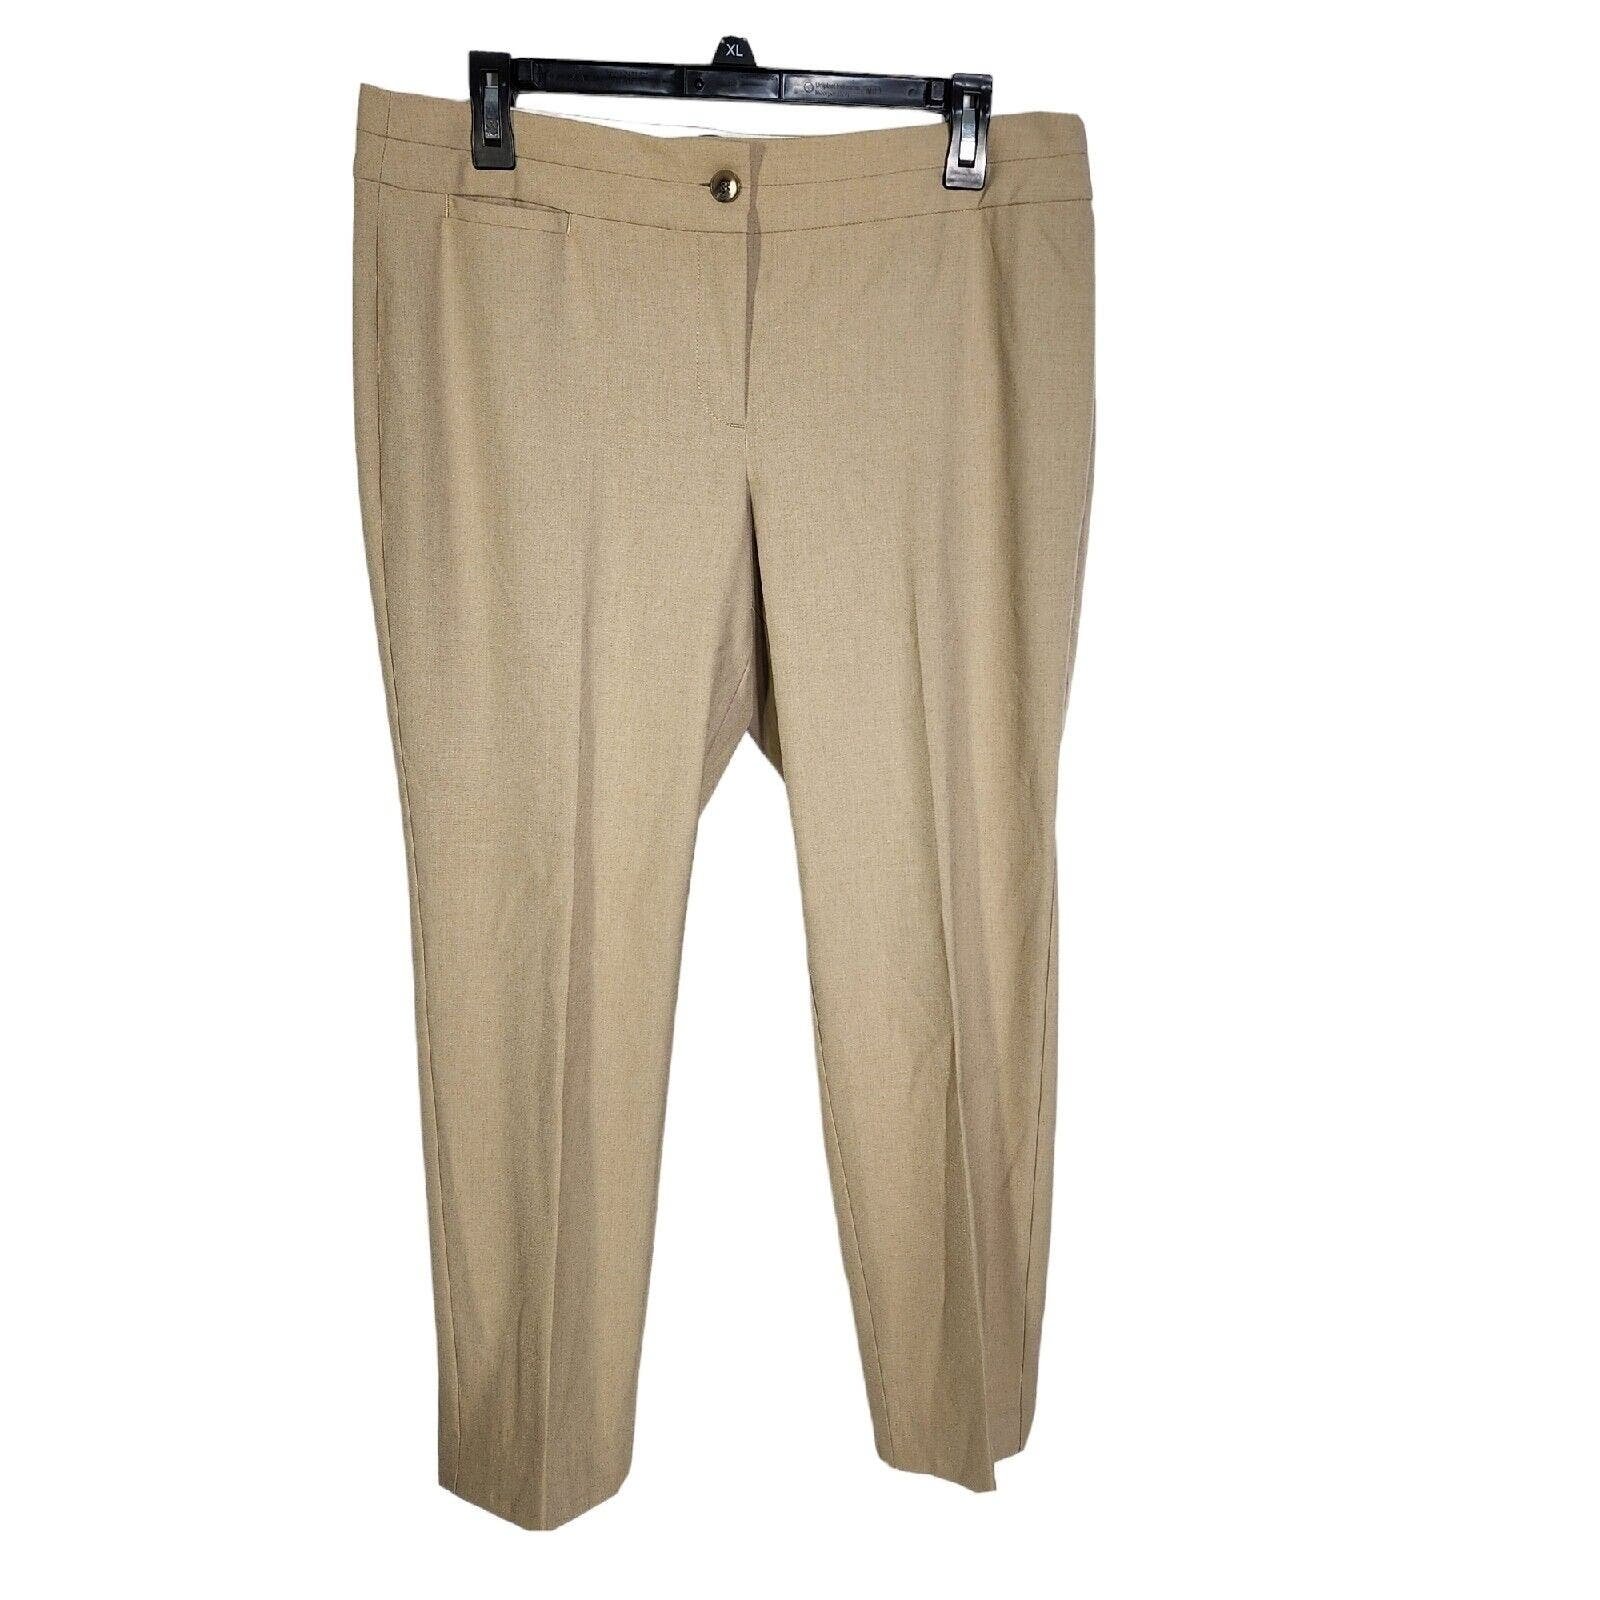 Nice Talbots Petites Womens Cropped Pants 12P Signature Chino Beige Khaki Mid Rise Of0uSxP8m Fashion